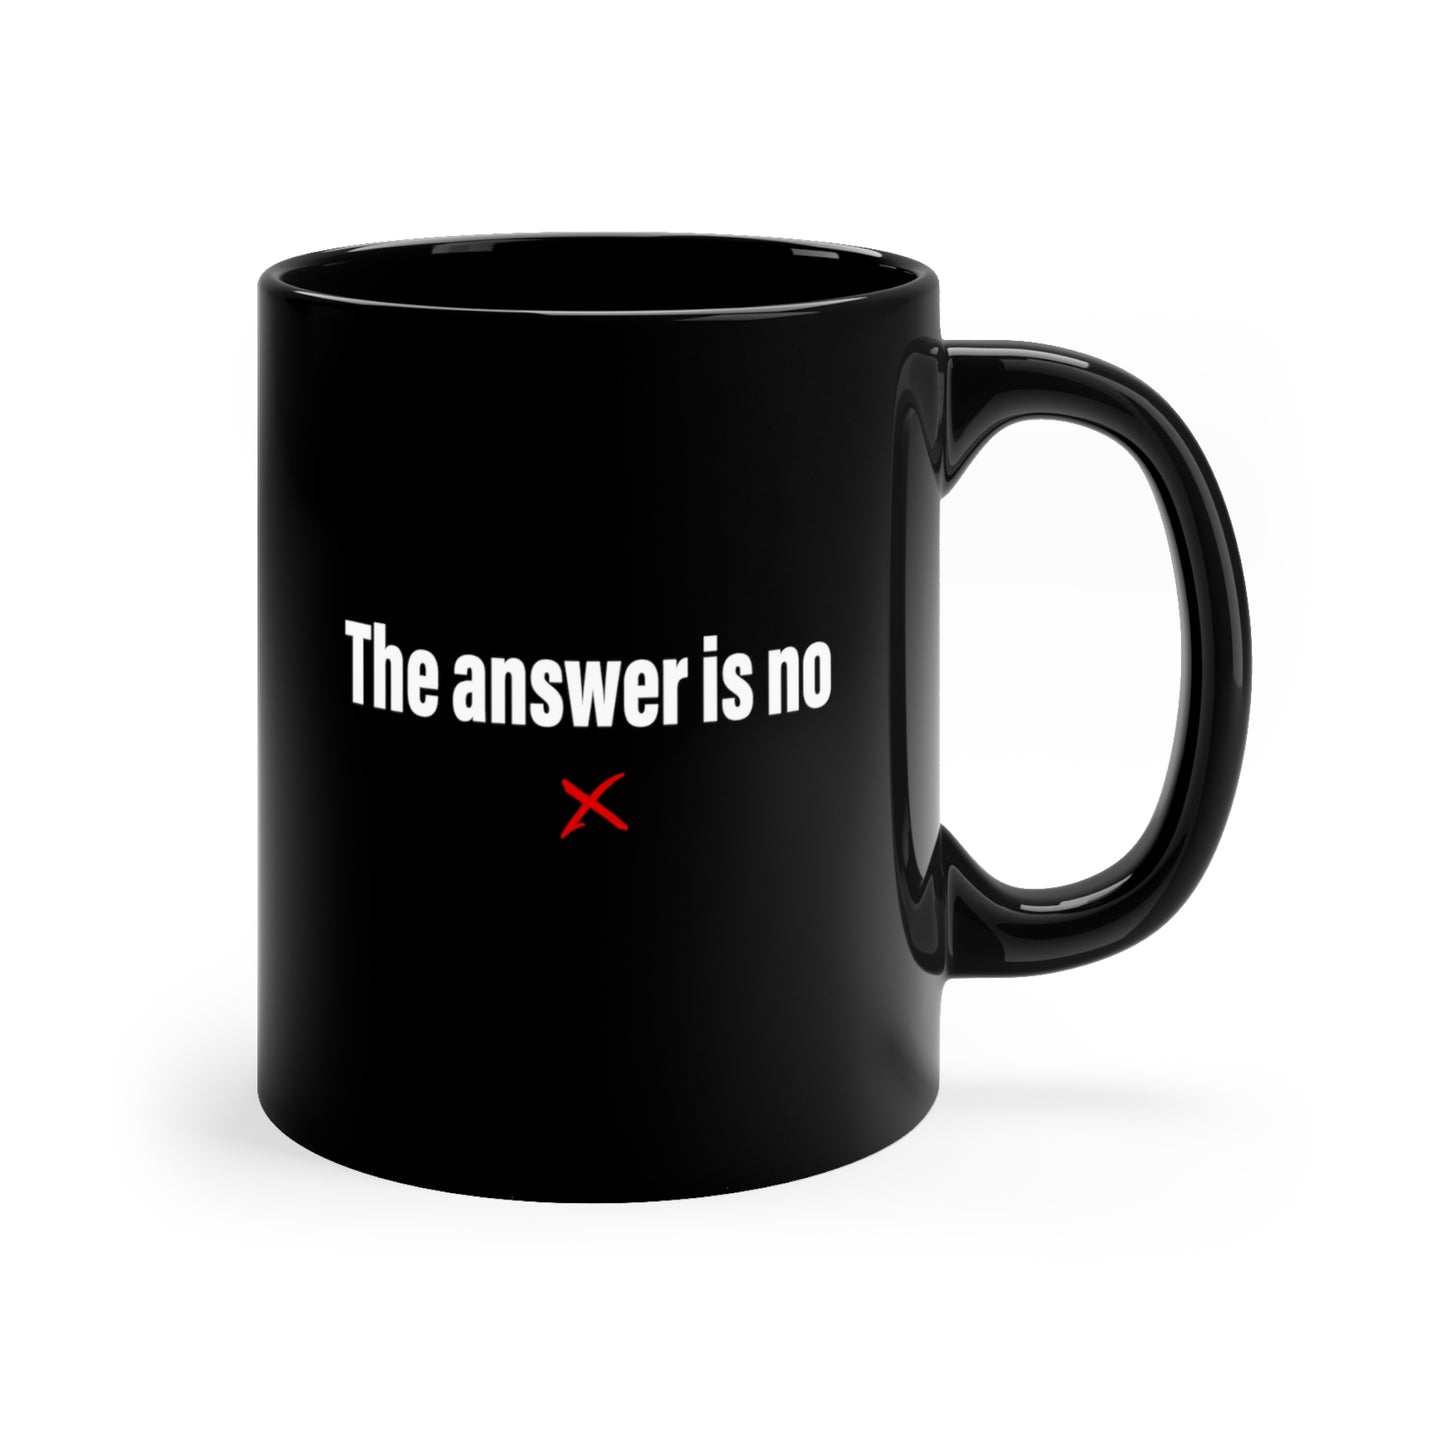 The answer is no - Mug